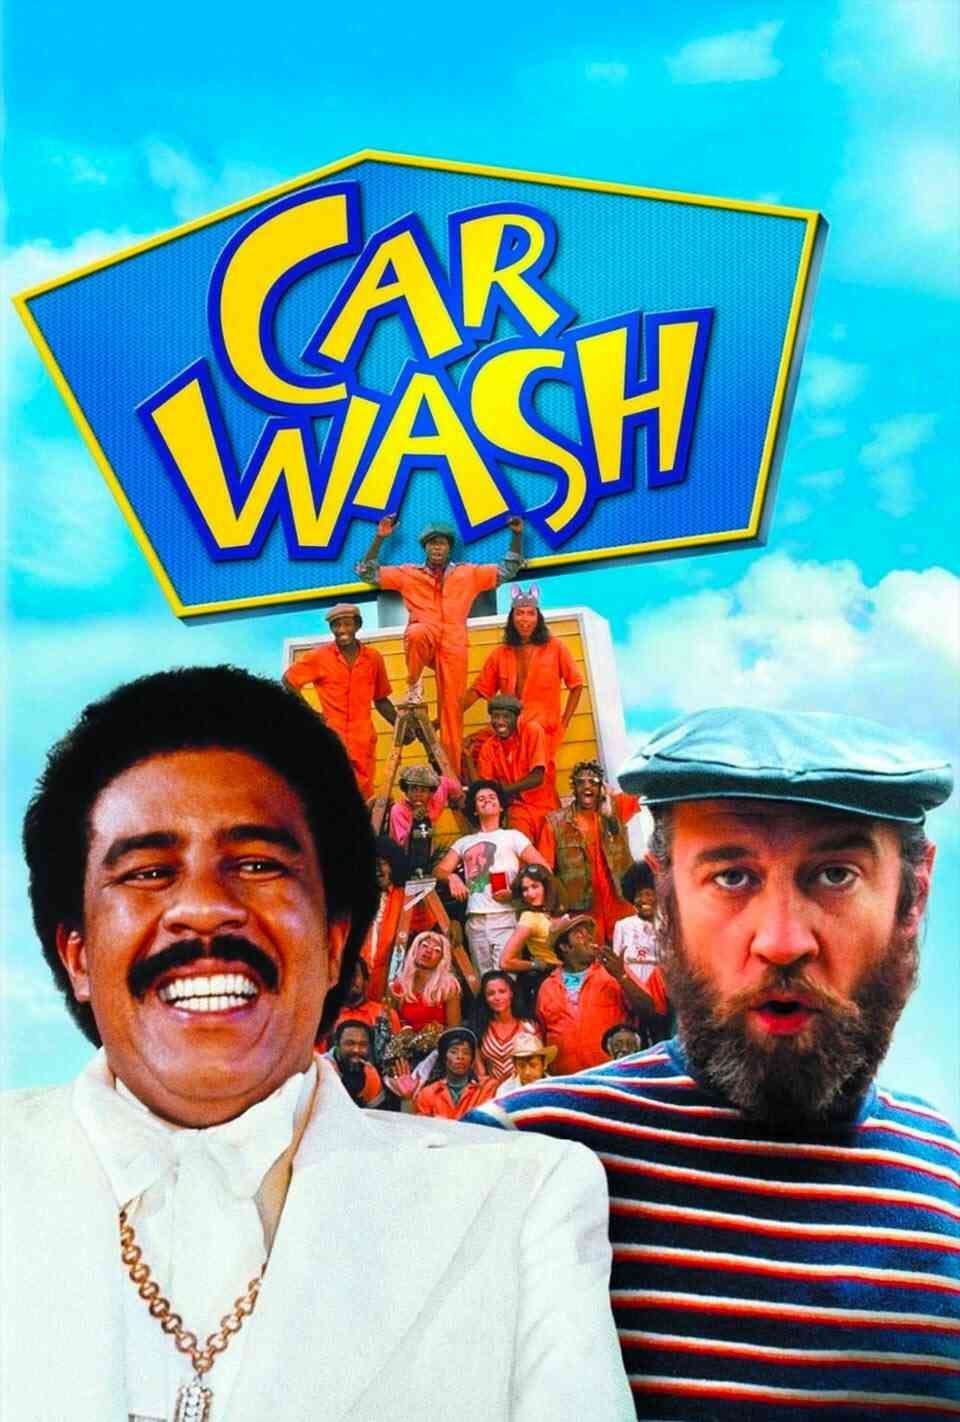 Read Car Wash screenplay (poster)